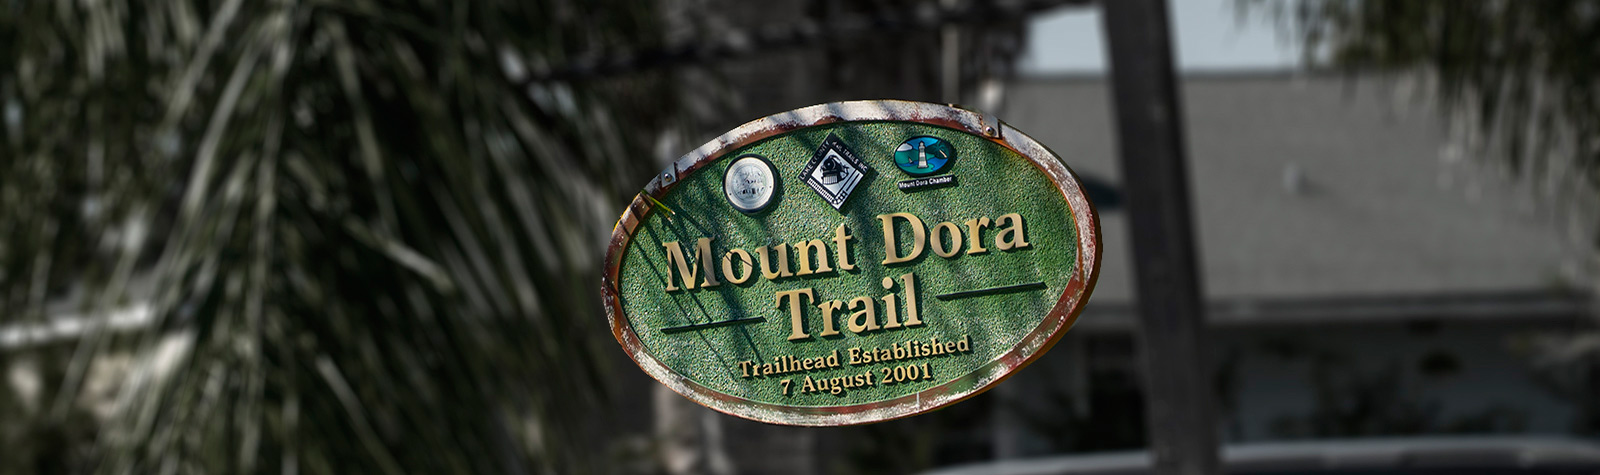 trailhead marker for the Mount Dora trail